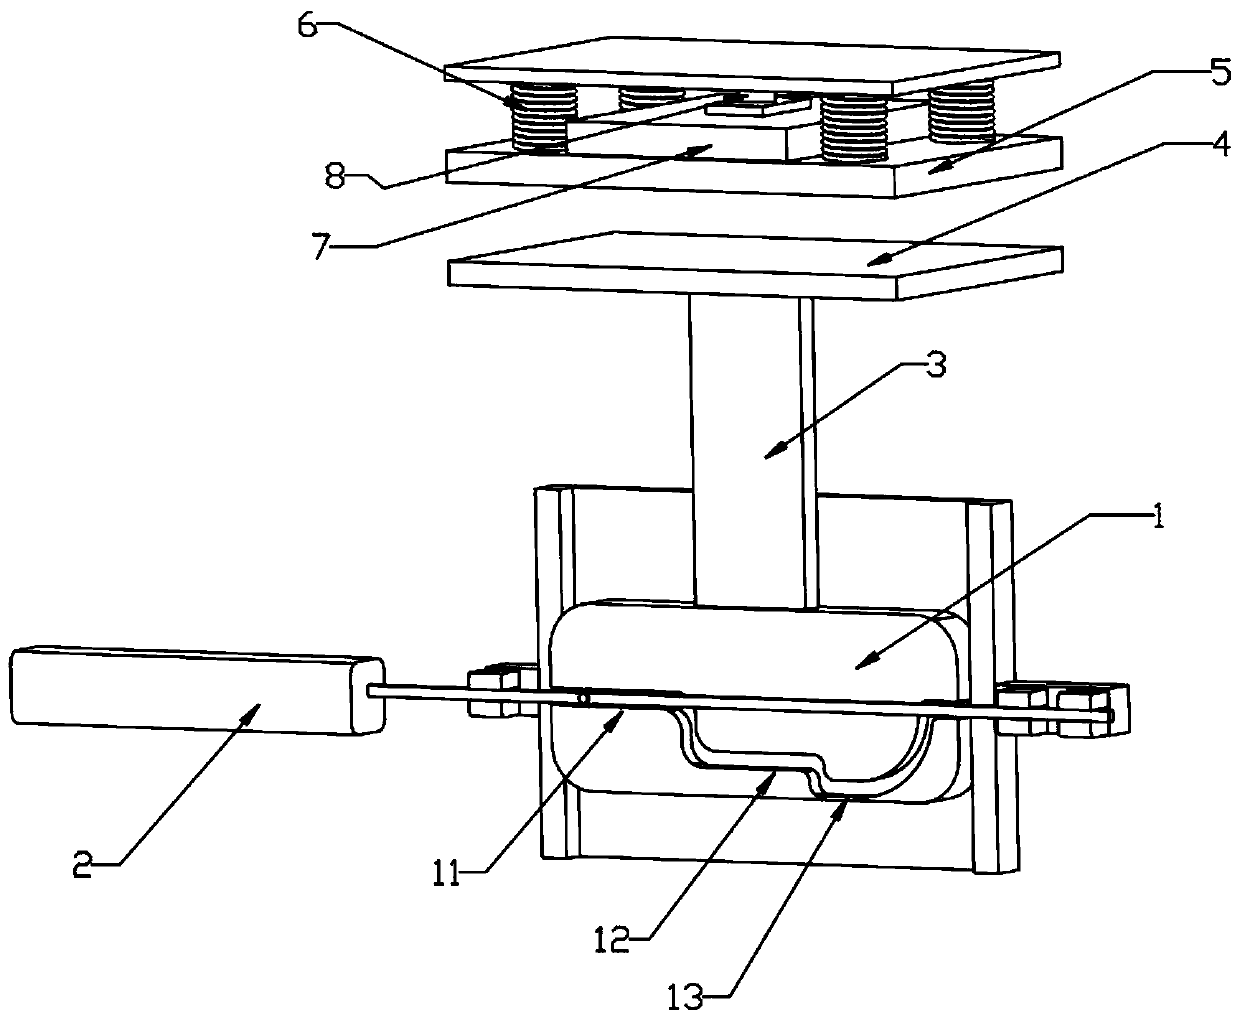 Auxiliary pressing device for rigid-flex board